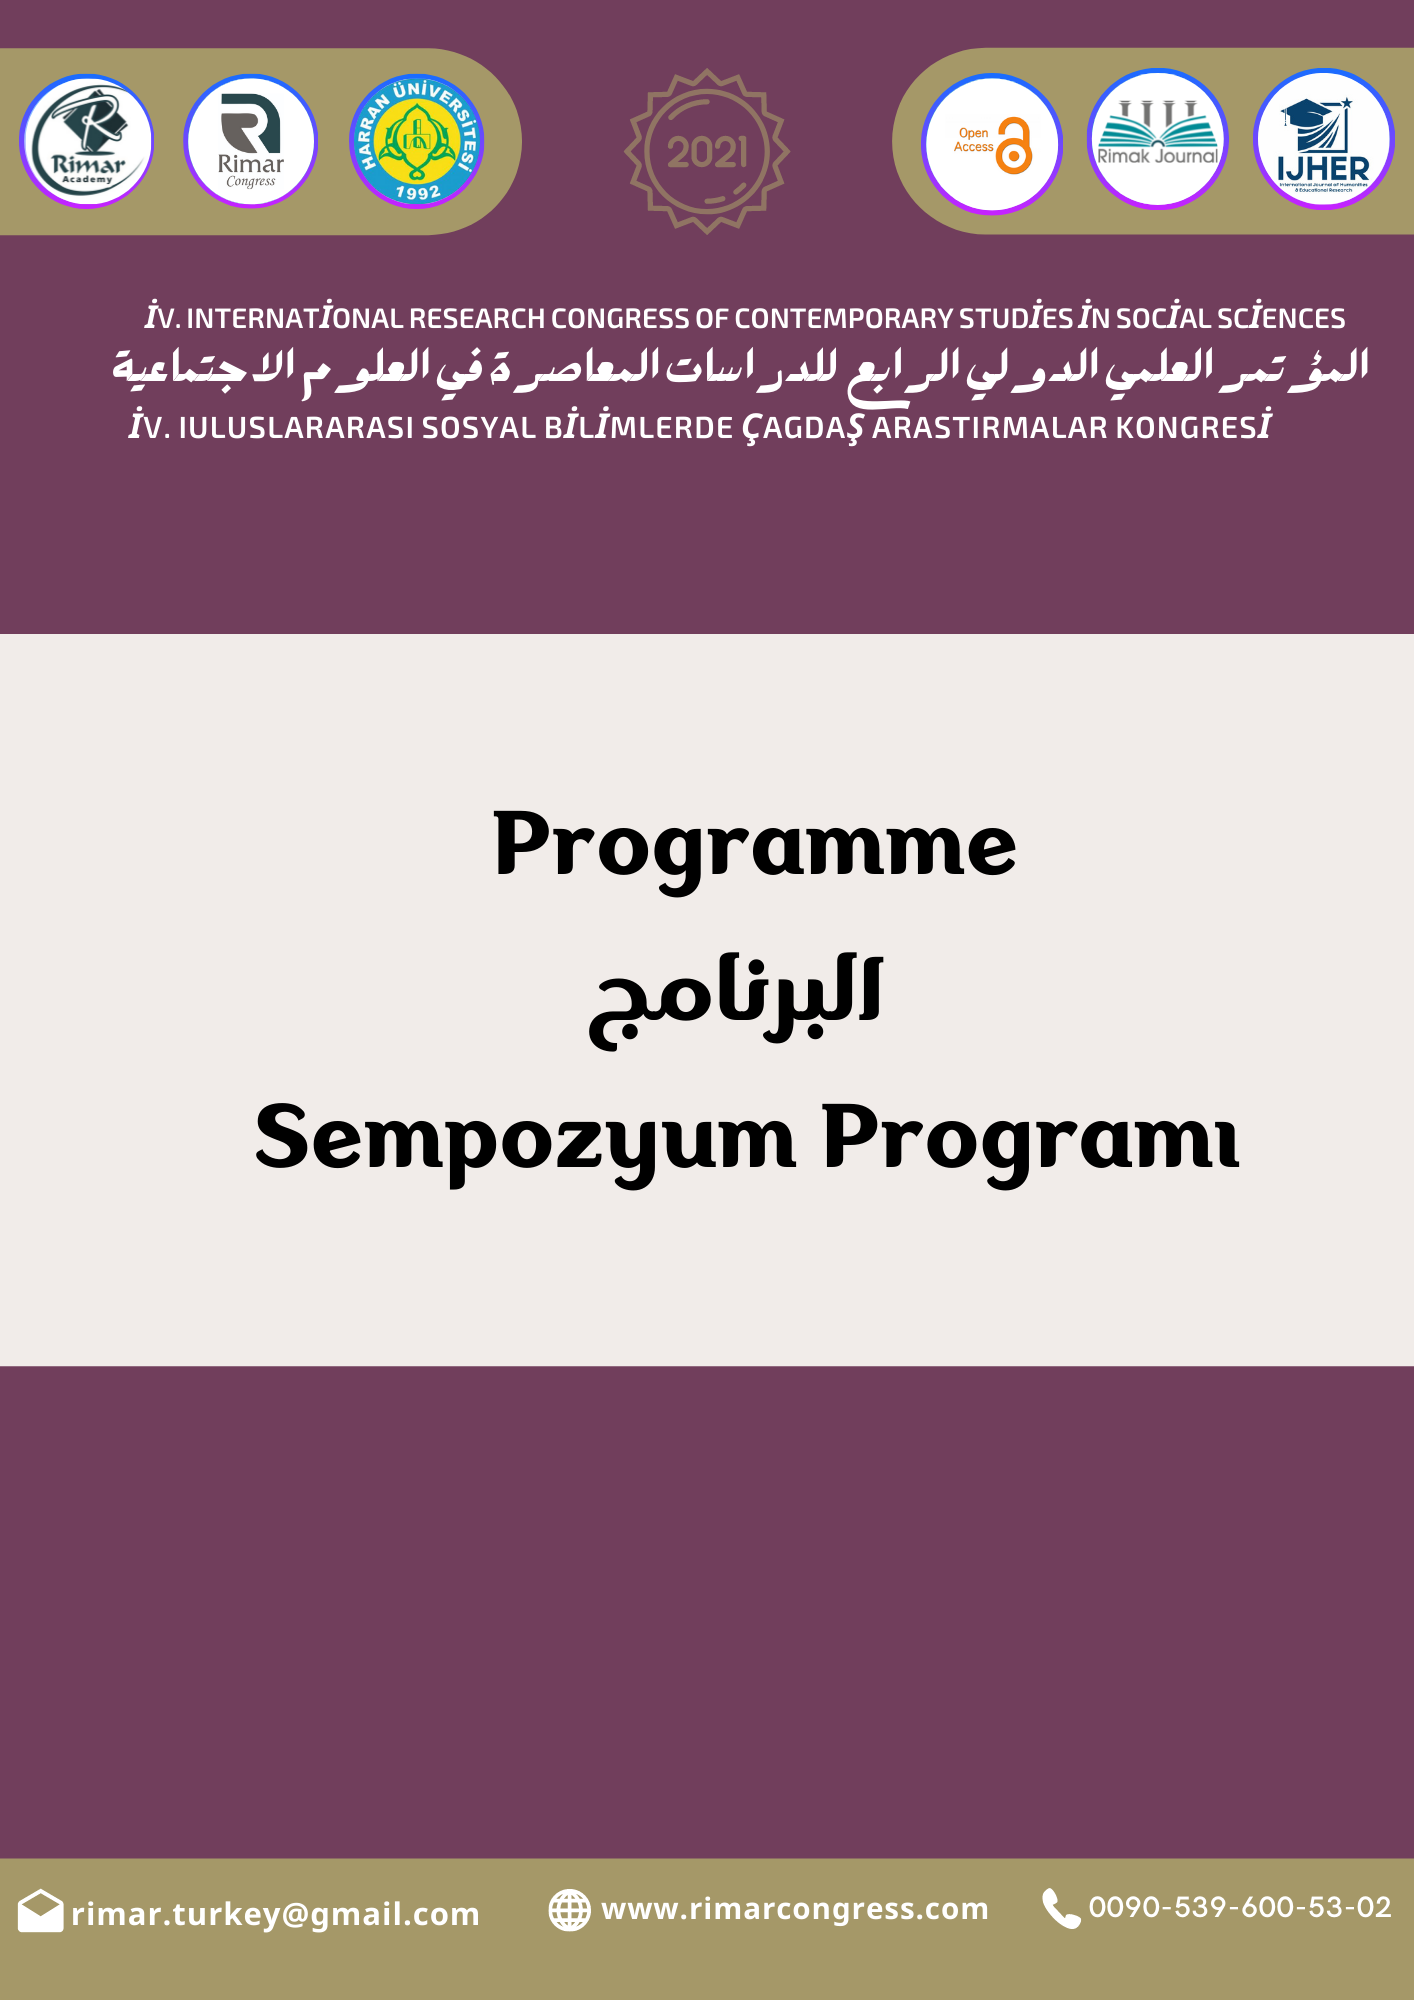 program (5).png